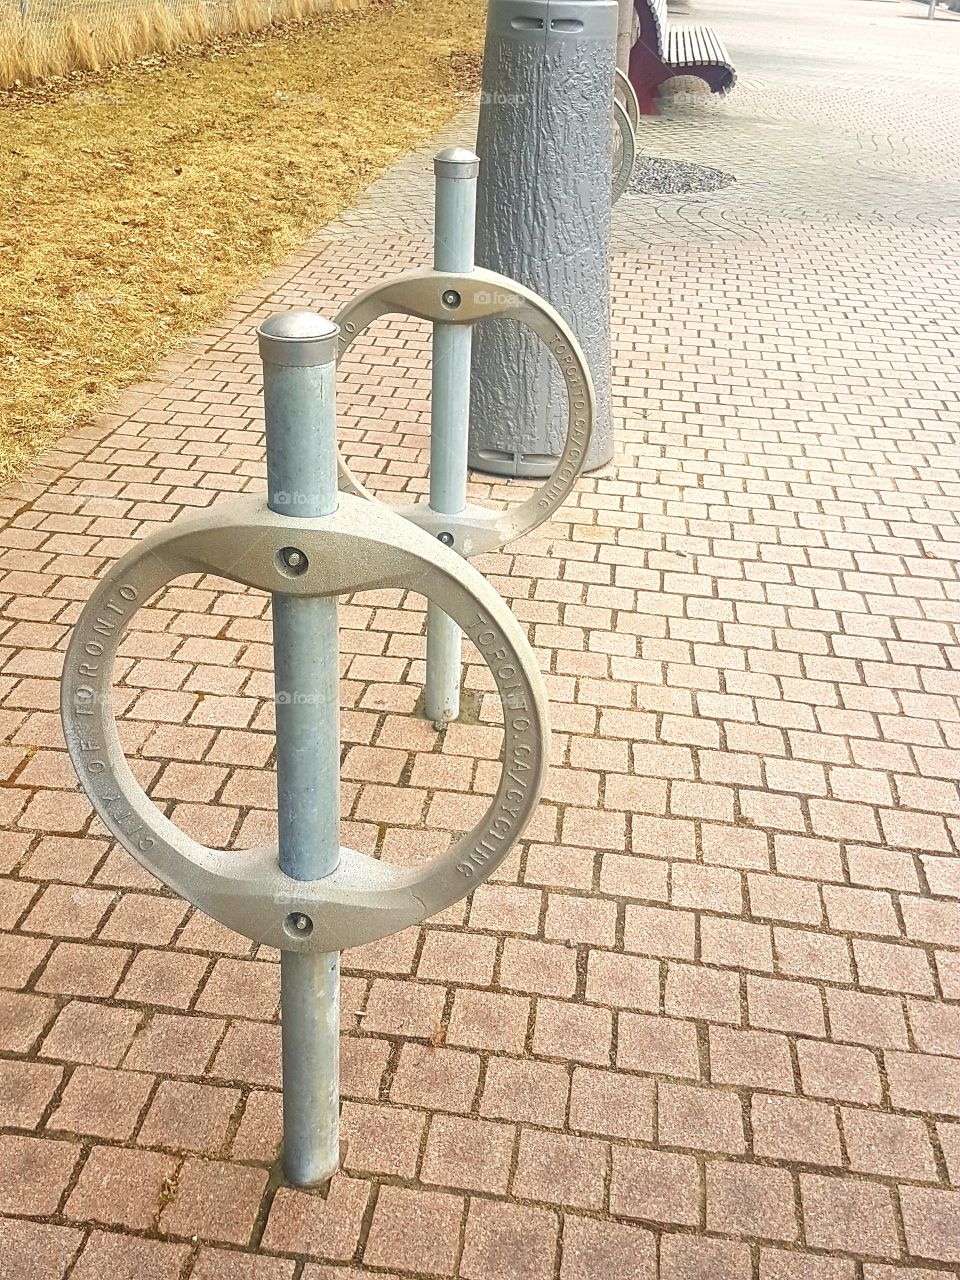 city bike rack